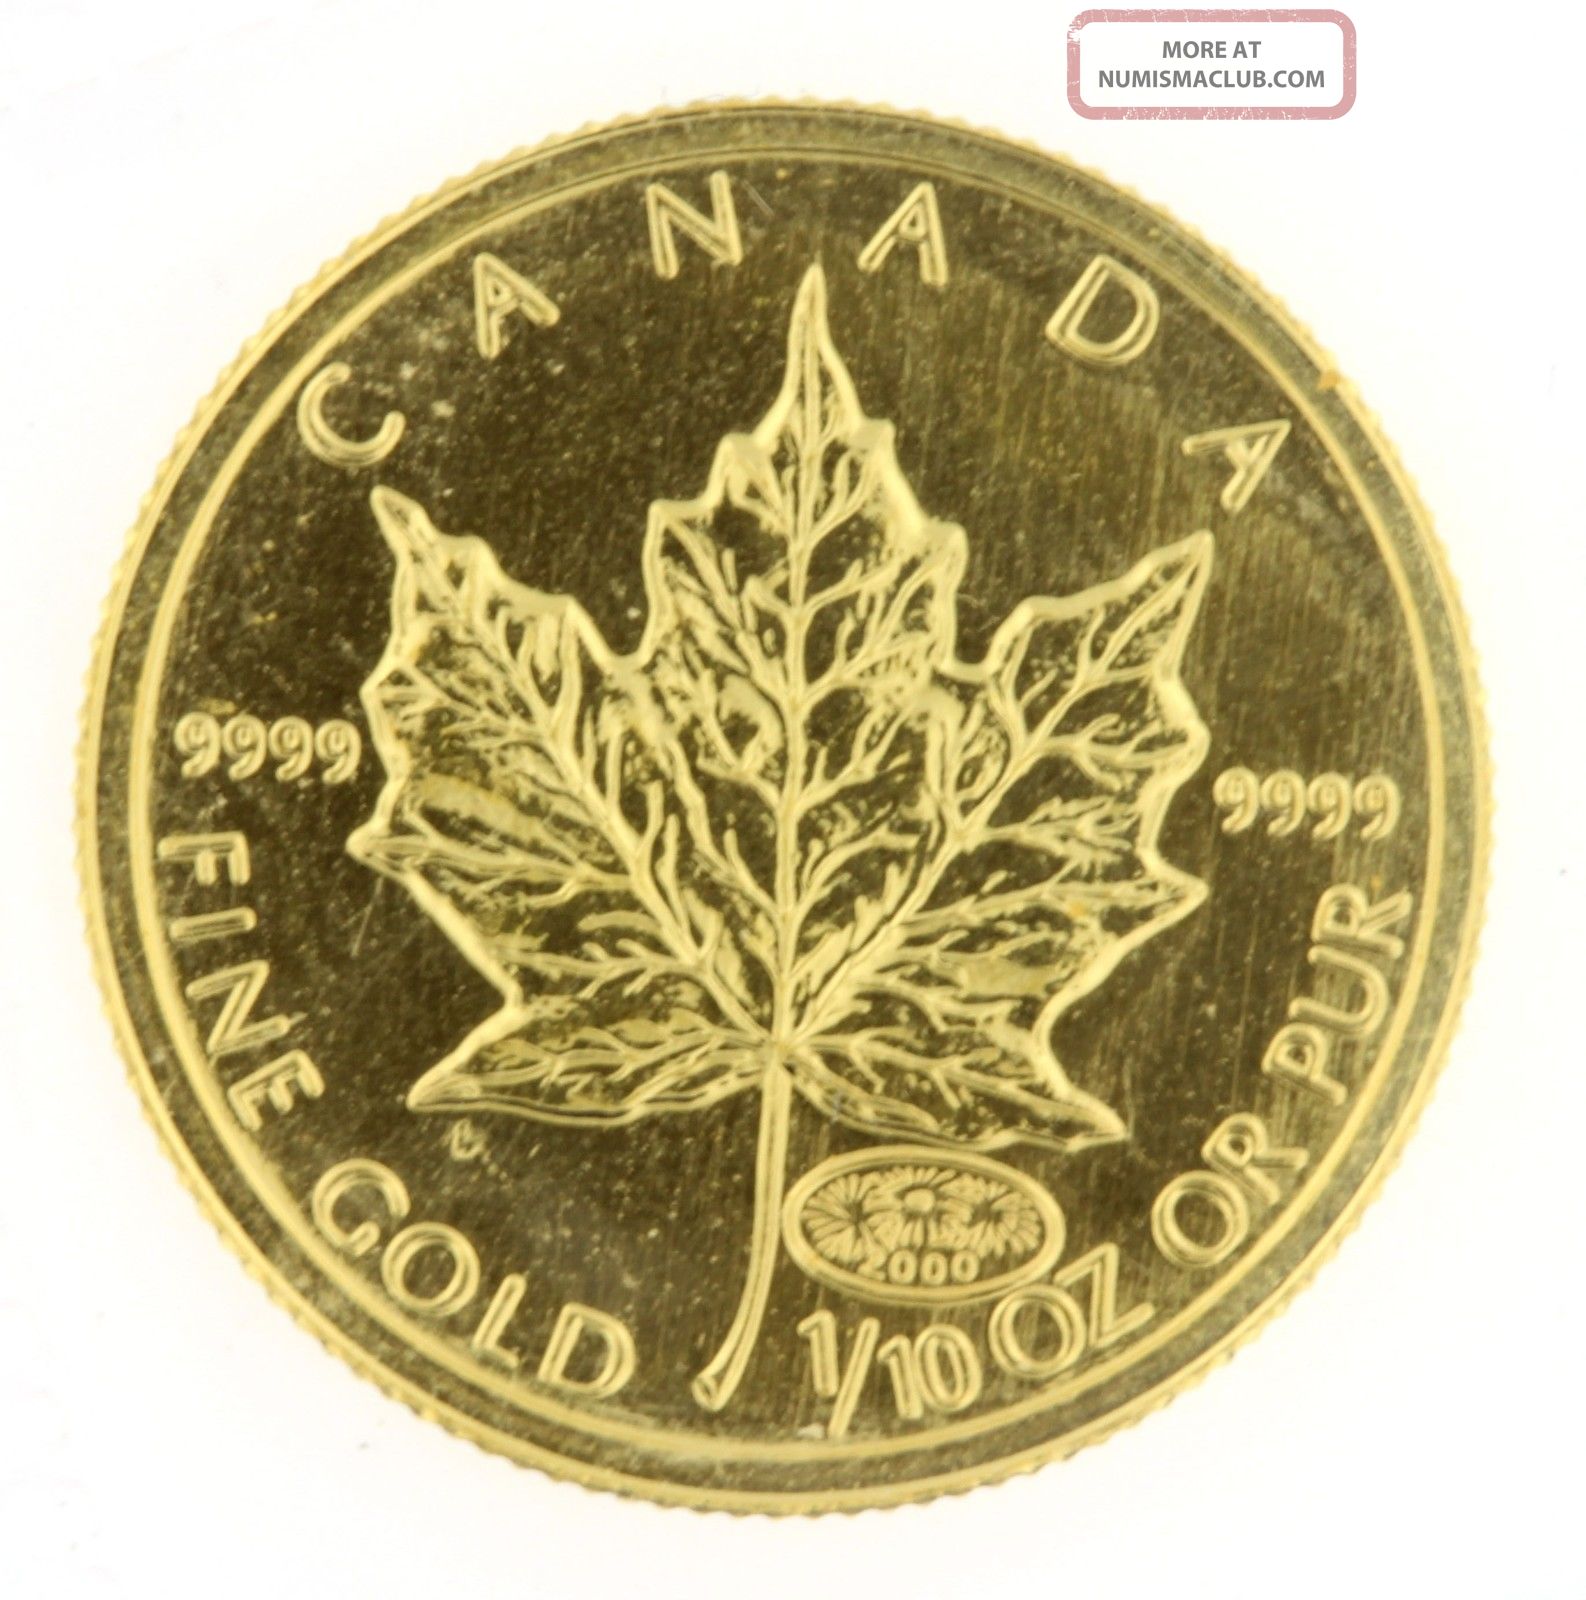 2000 5 Canadian Maple Leaf 1/10 Oz. 9999 Fine Gold Coin Bullion Uncirculated